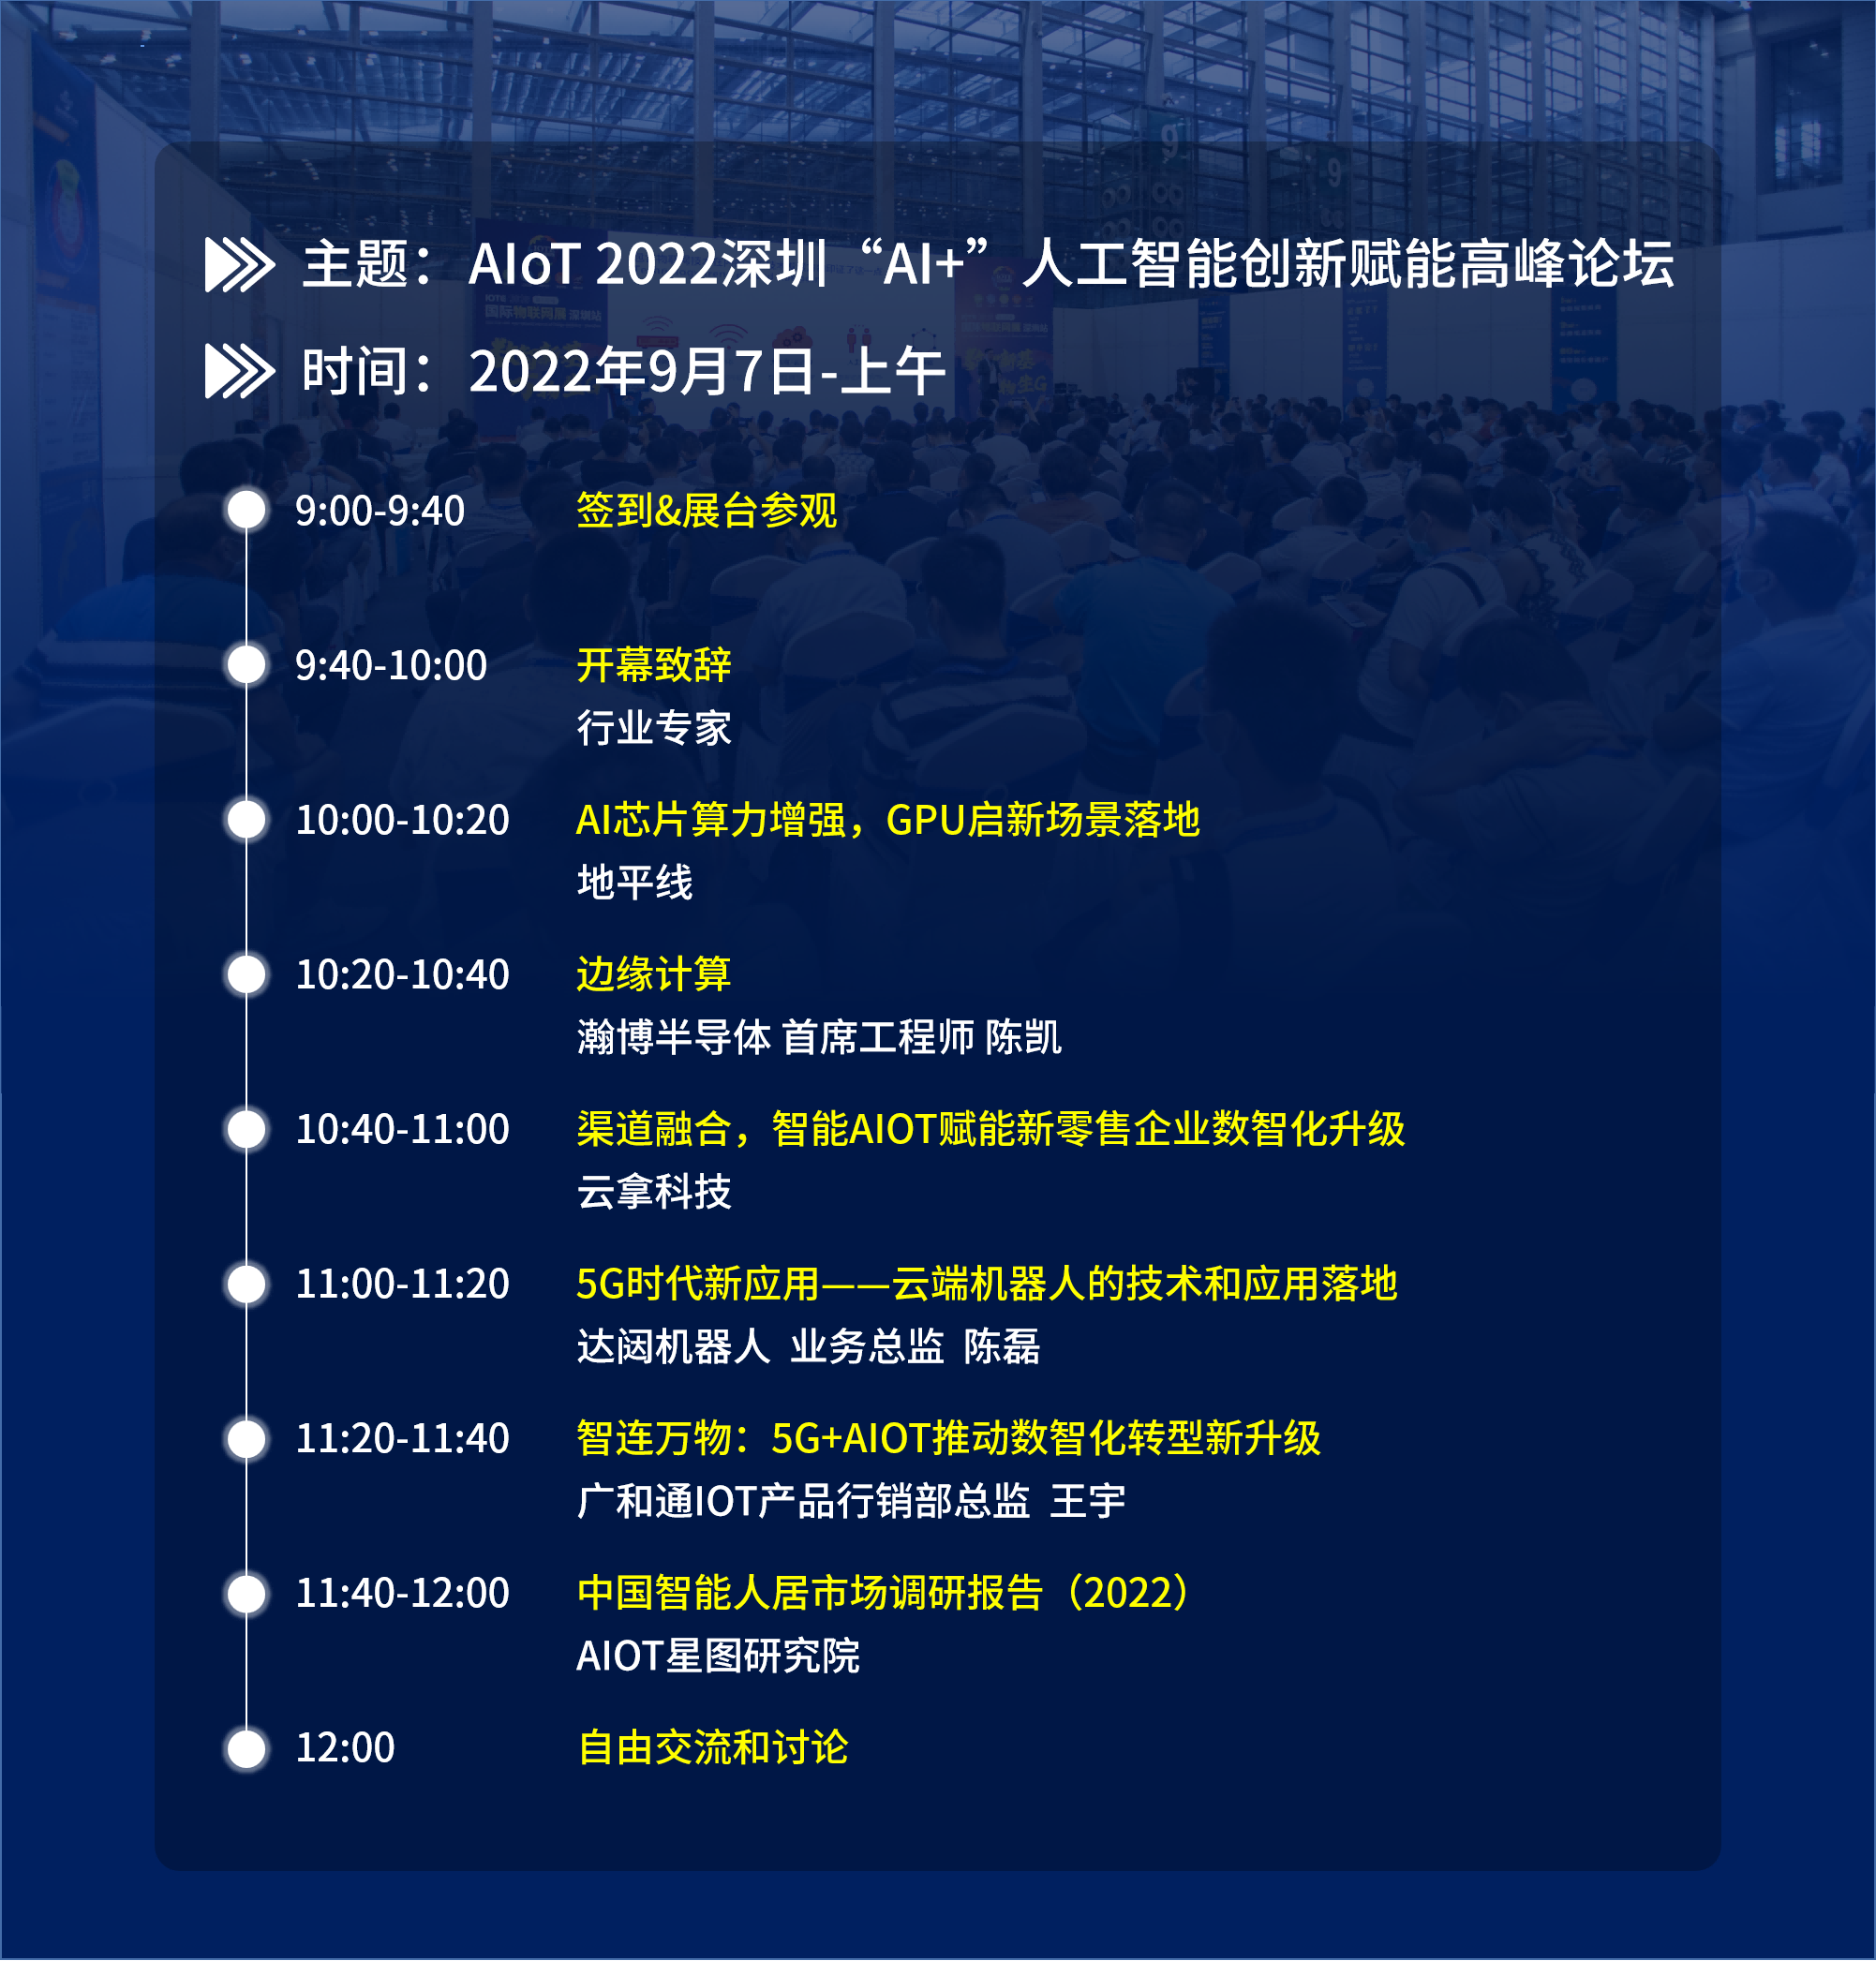 AIoT 2022深圳“AI+”人工智能創新賦能高峰論壇.png